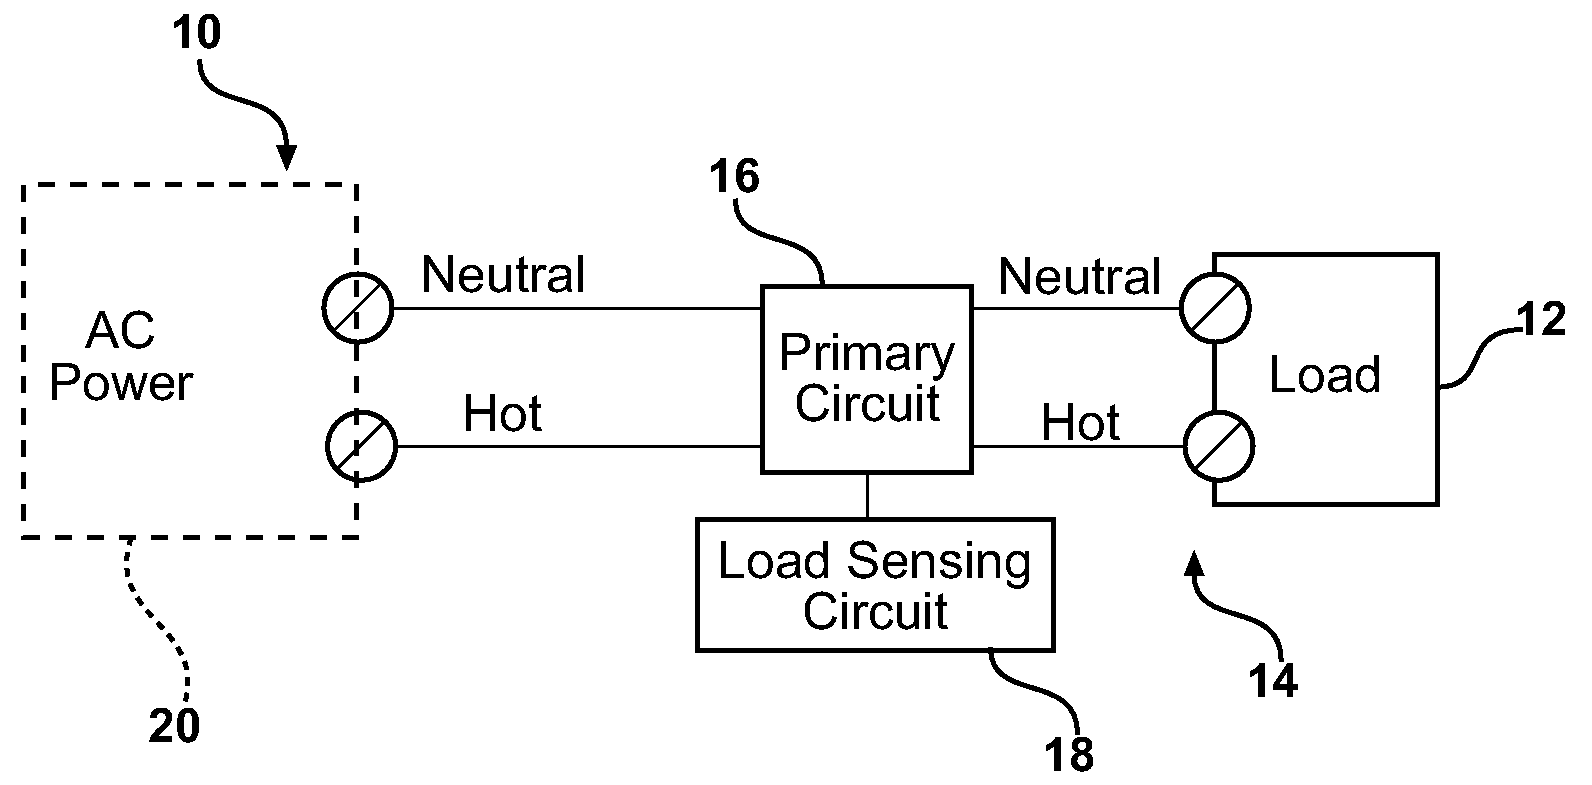 Current Sensing Load Demand Apparatus and Methods